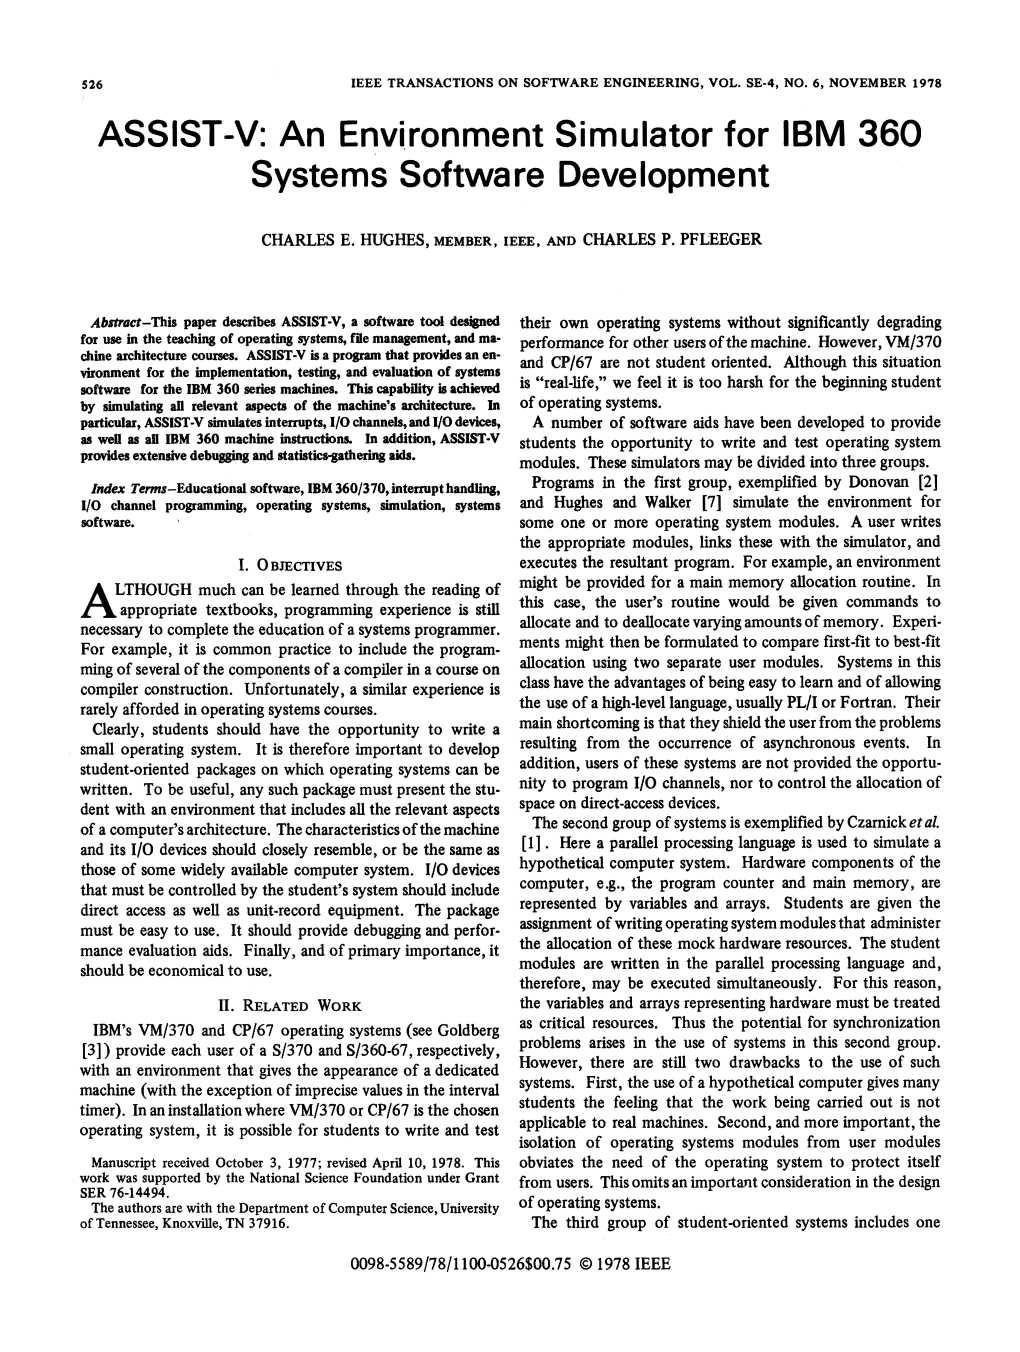 Systems Software Development